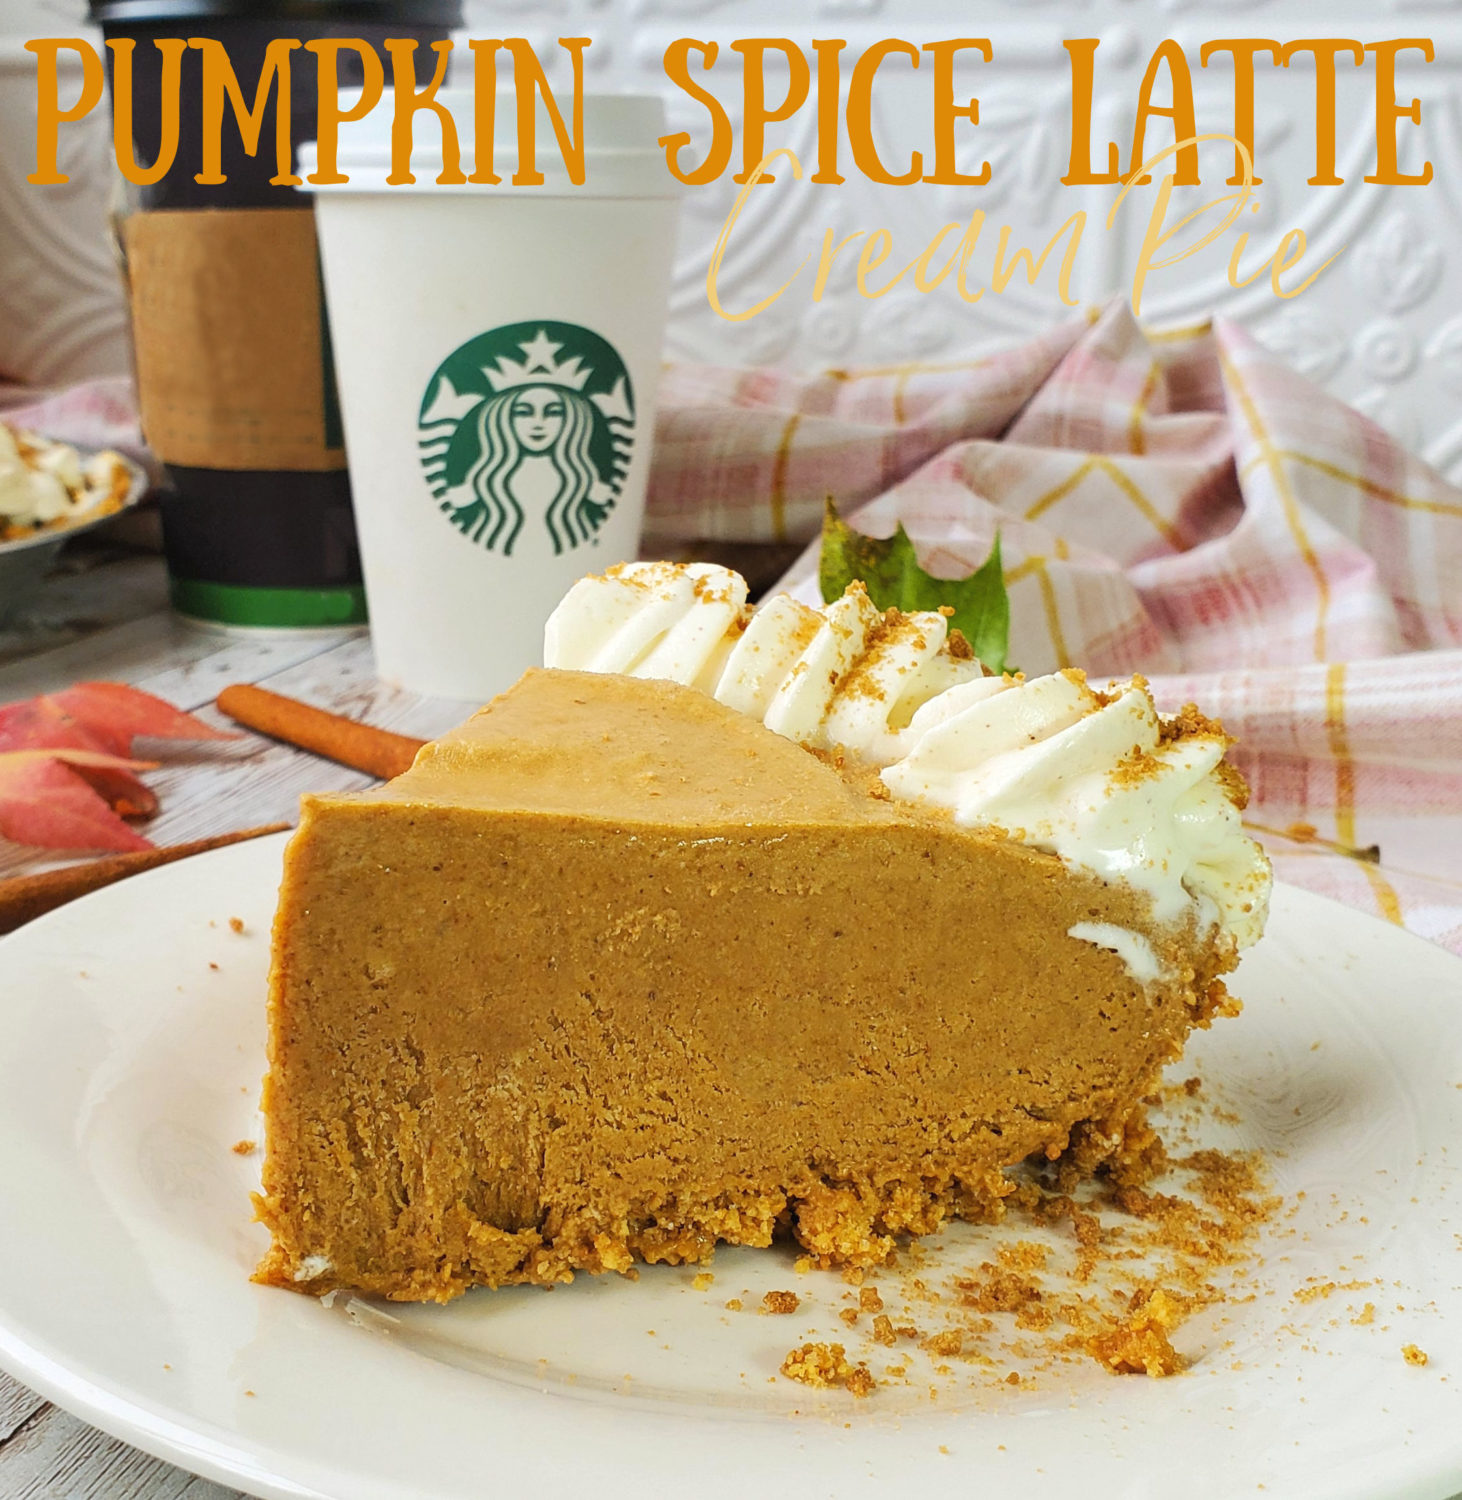 Pumpkin Spice Latte Cream Pie: Creamy pumpkin, a healthy dose of espresso, pumpkin pie spice, whipped cream, with a crispy gingersnap crust.